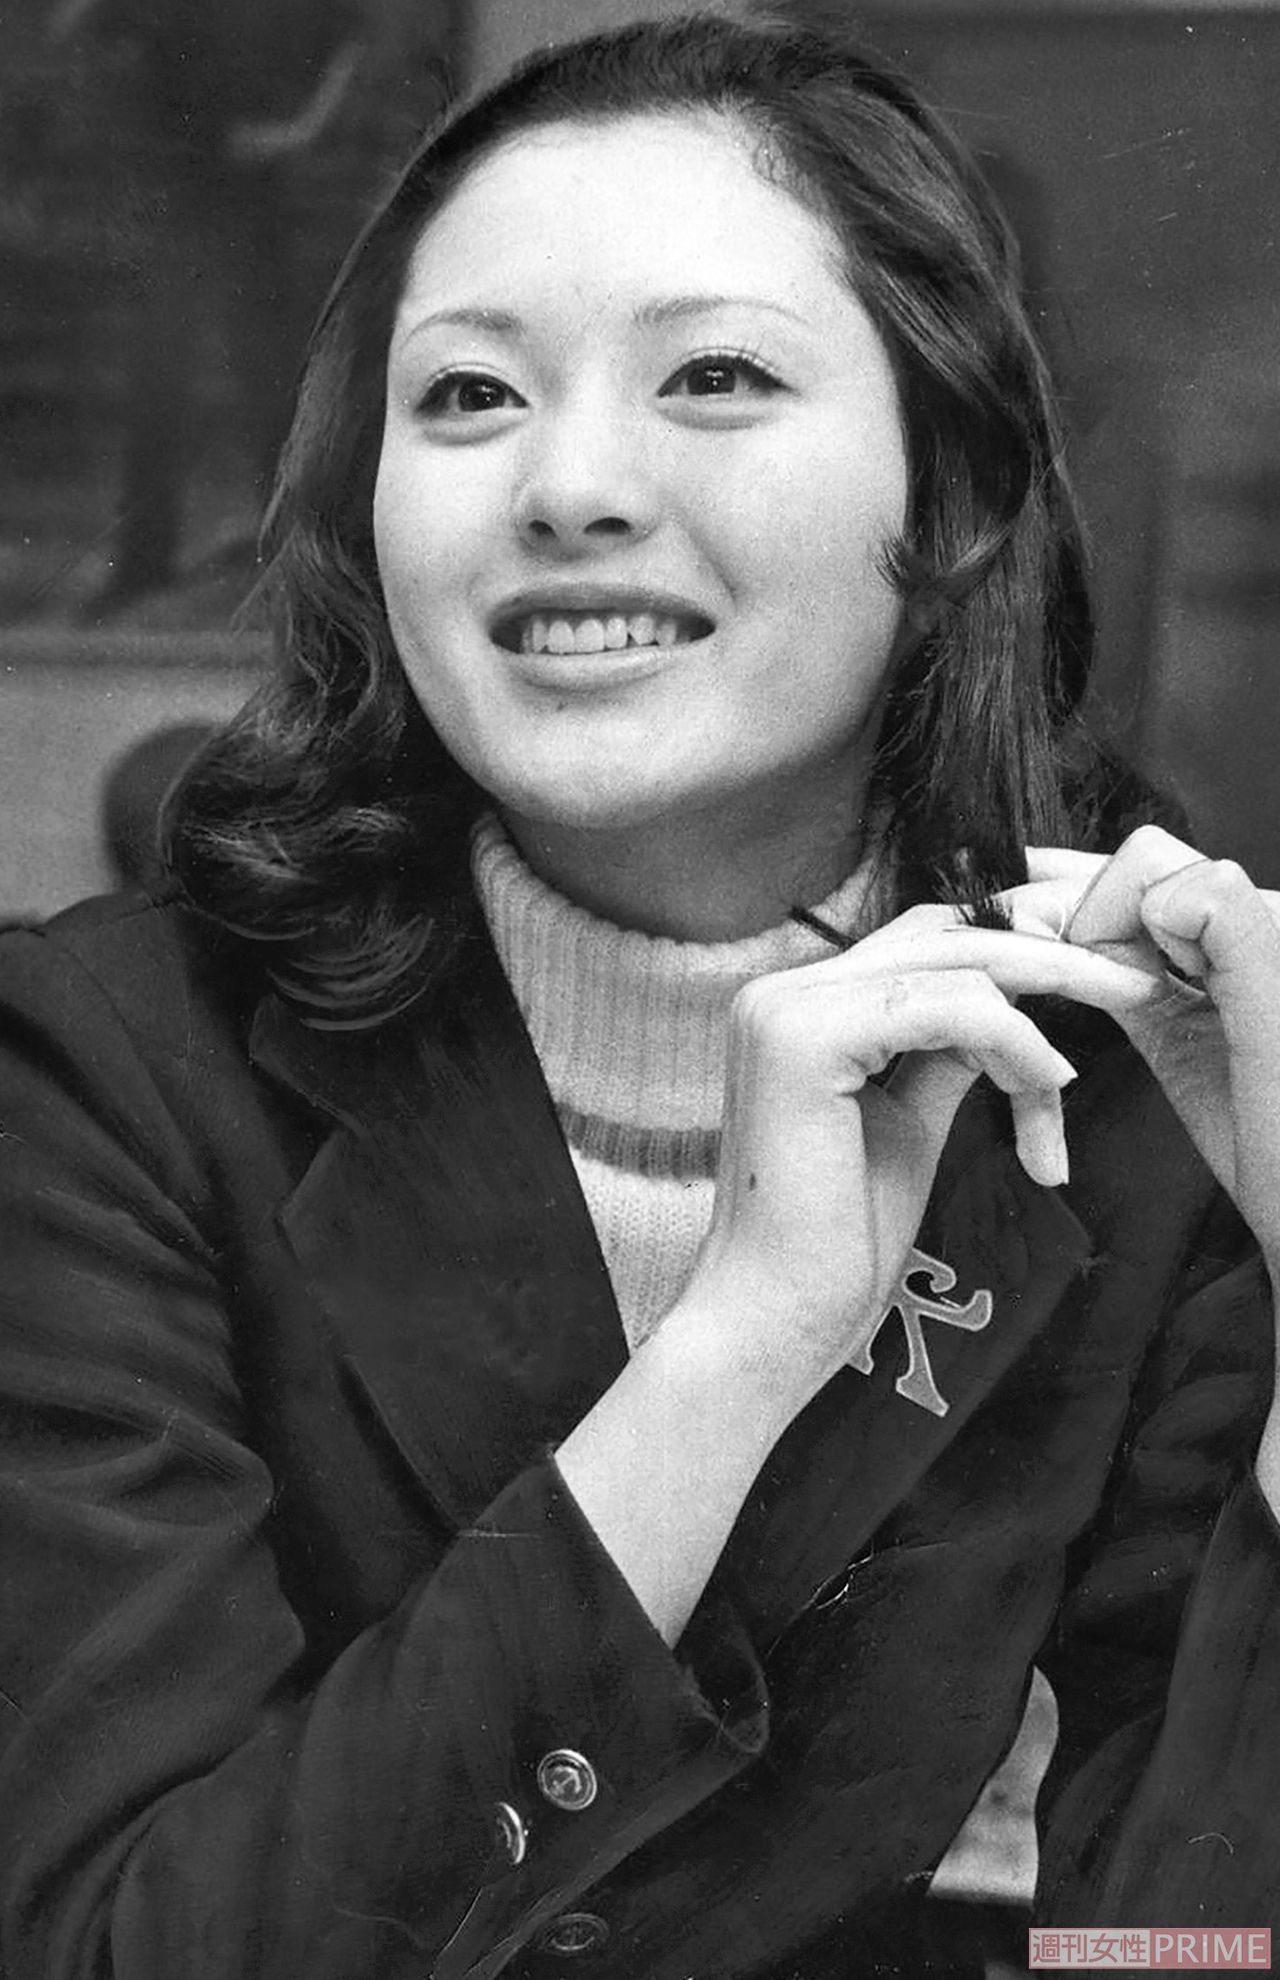 松坂慶子の画像 写真 72年の松坂慶子 2枚目 週刊女性prime